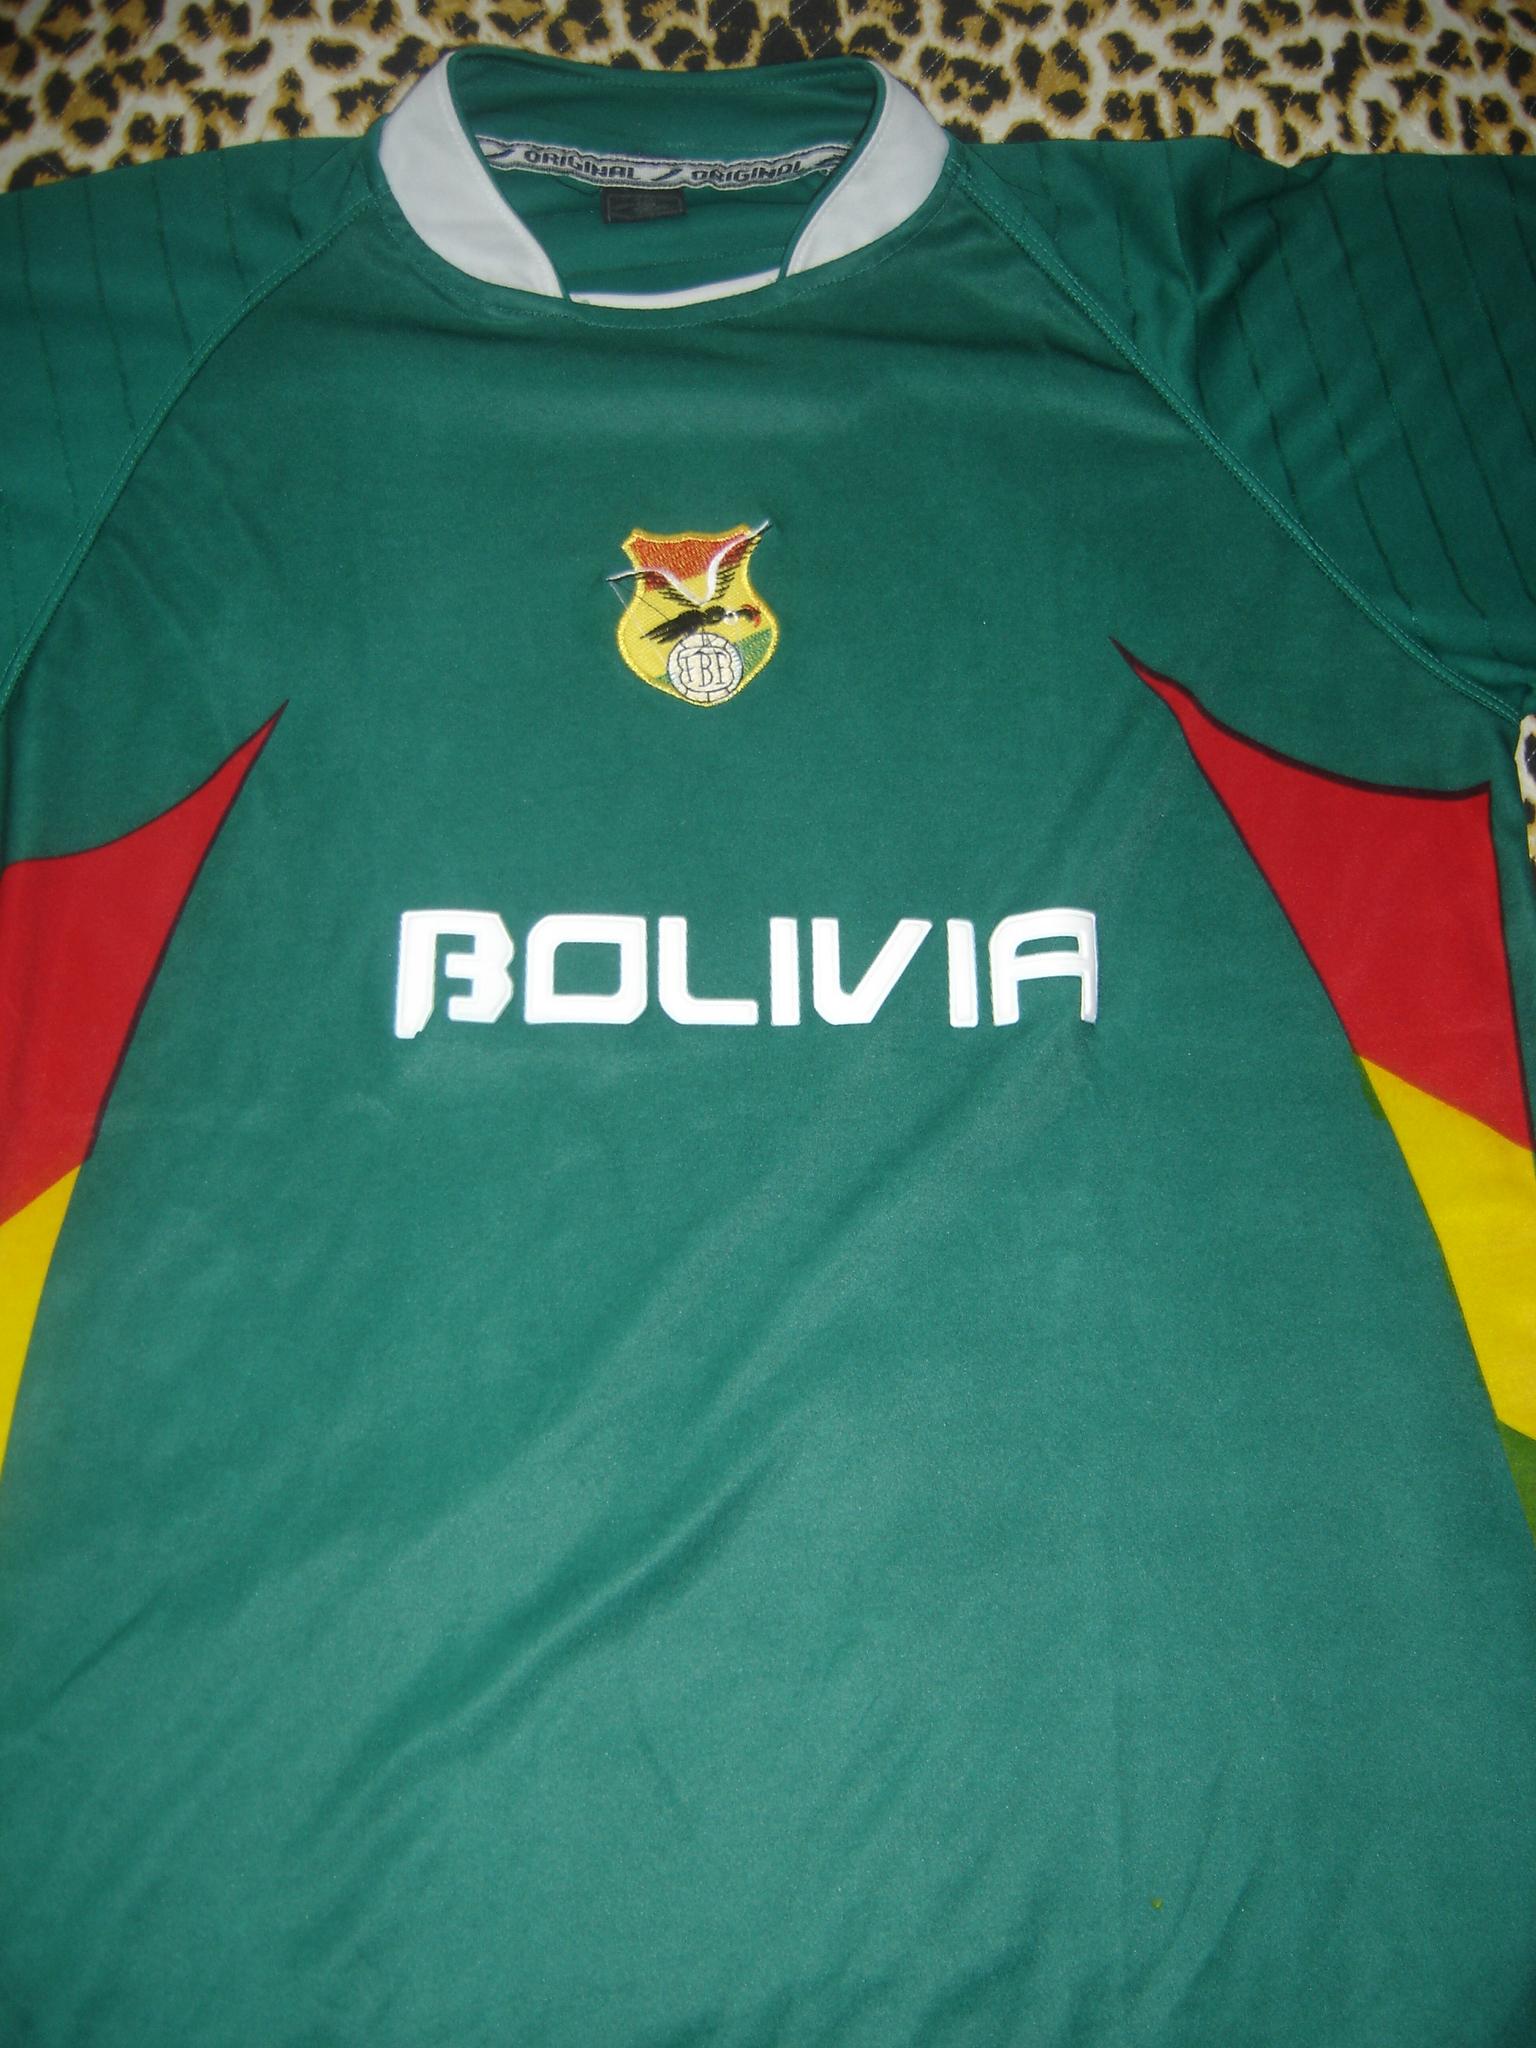 64- Camisa do Club Aurora